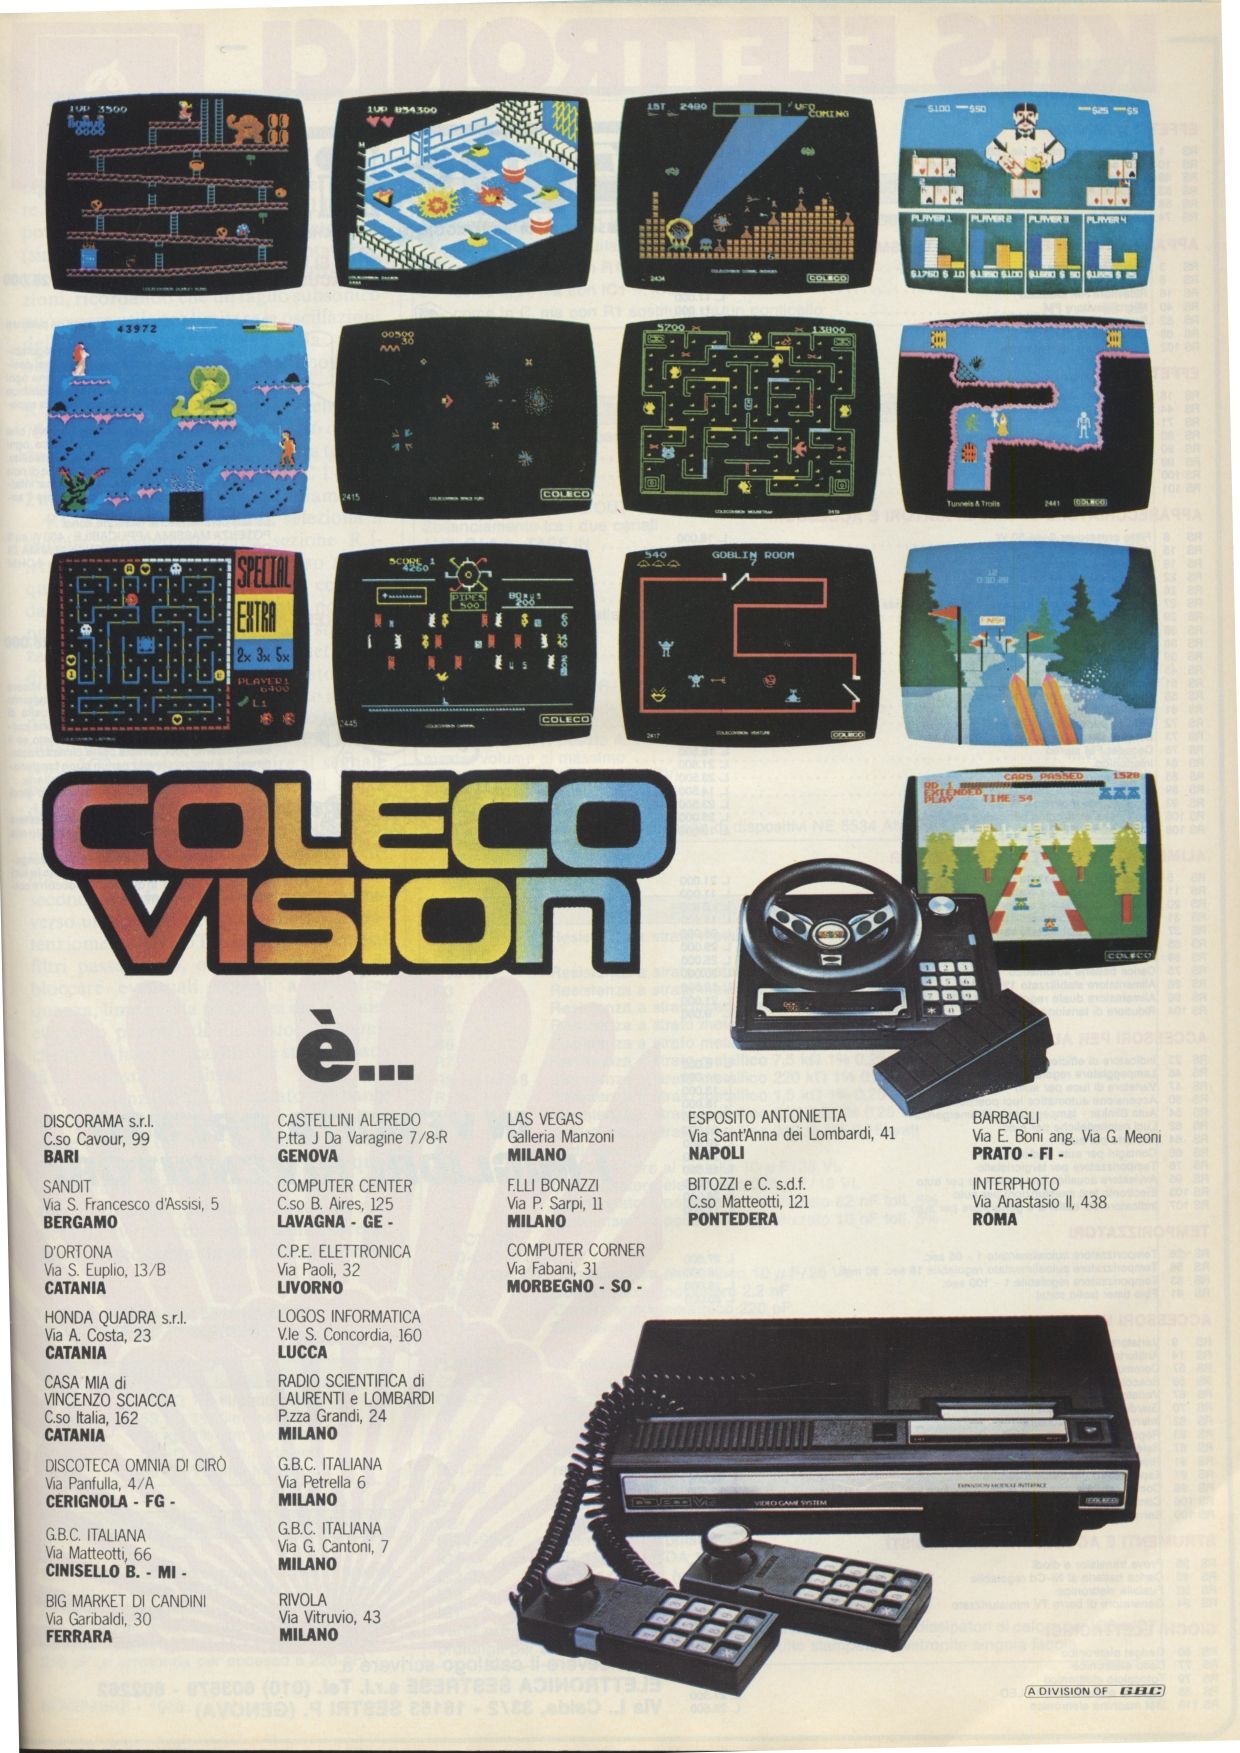 Coleco Vision